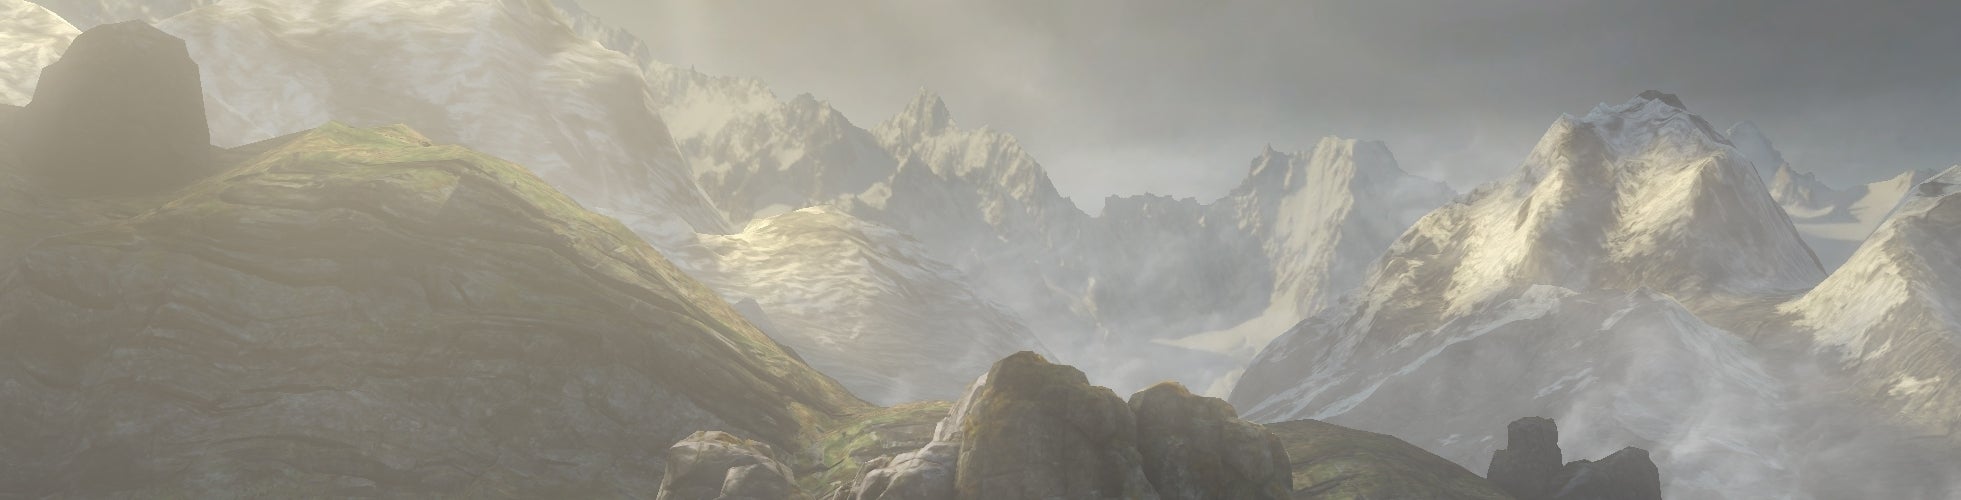 Obrazki dla Halo 4: Castle Map Pack DLC - Recenzja